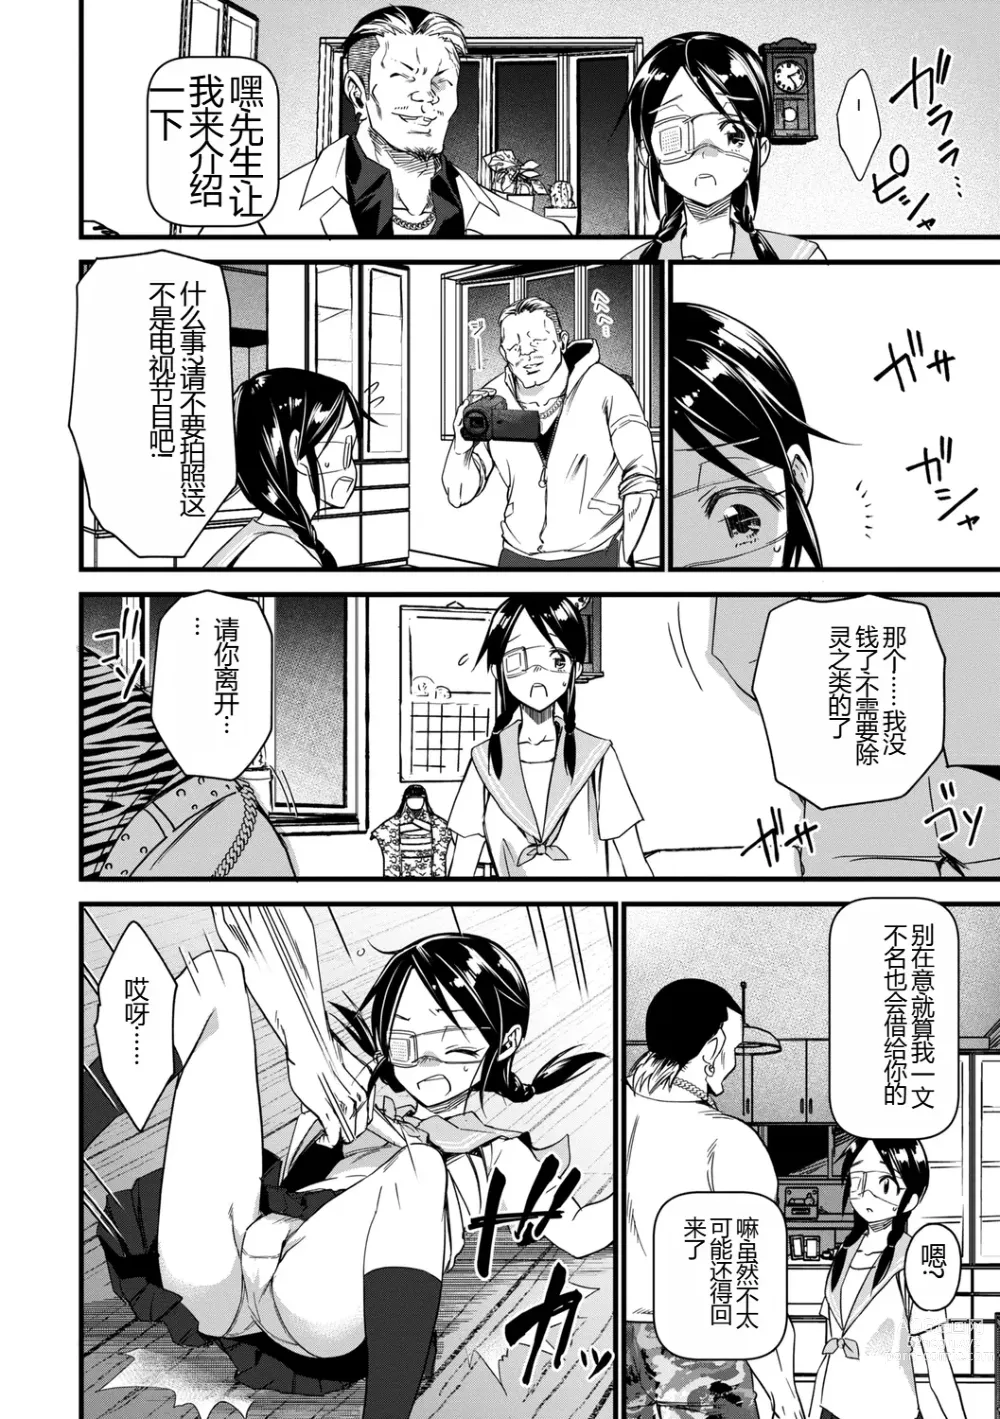 Page 14 of manga Nikugyaku Egoism